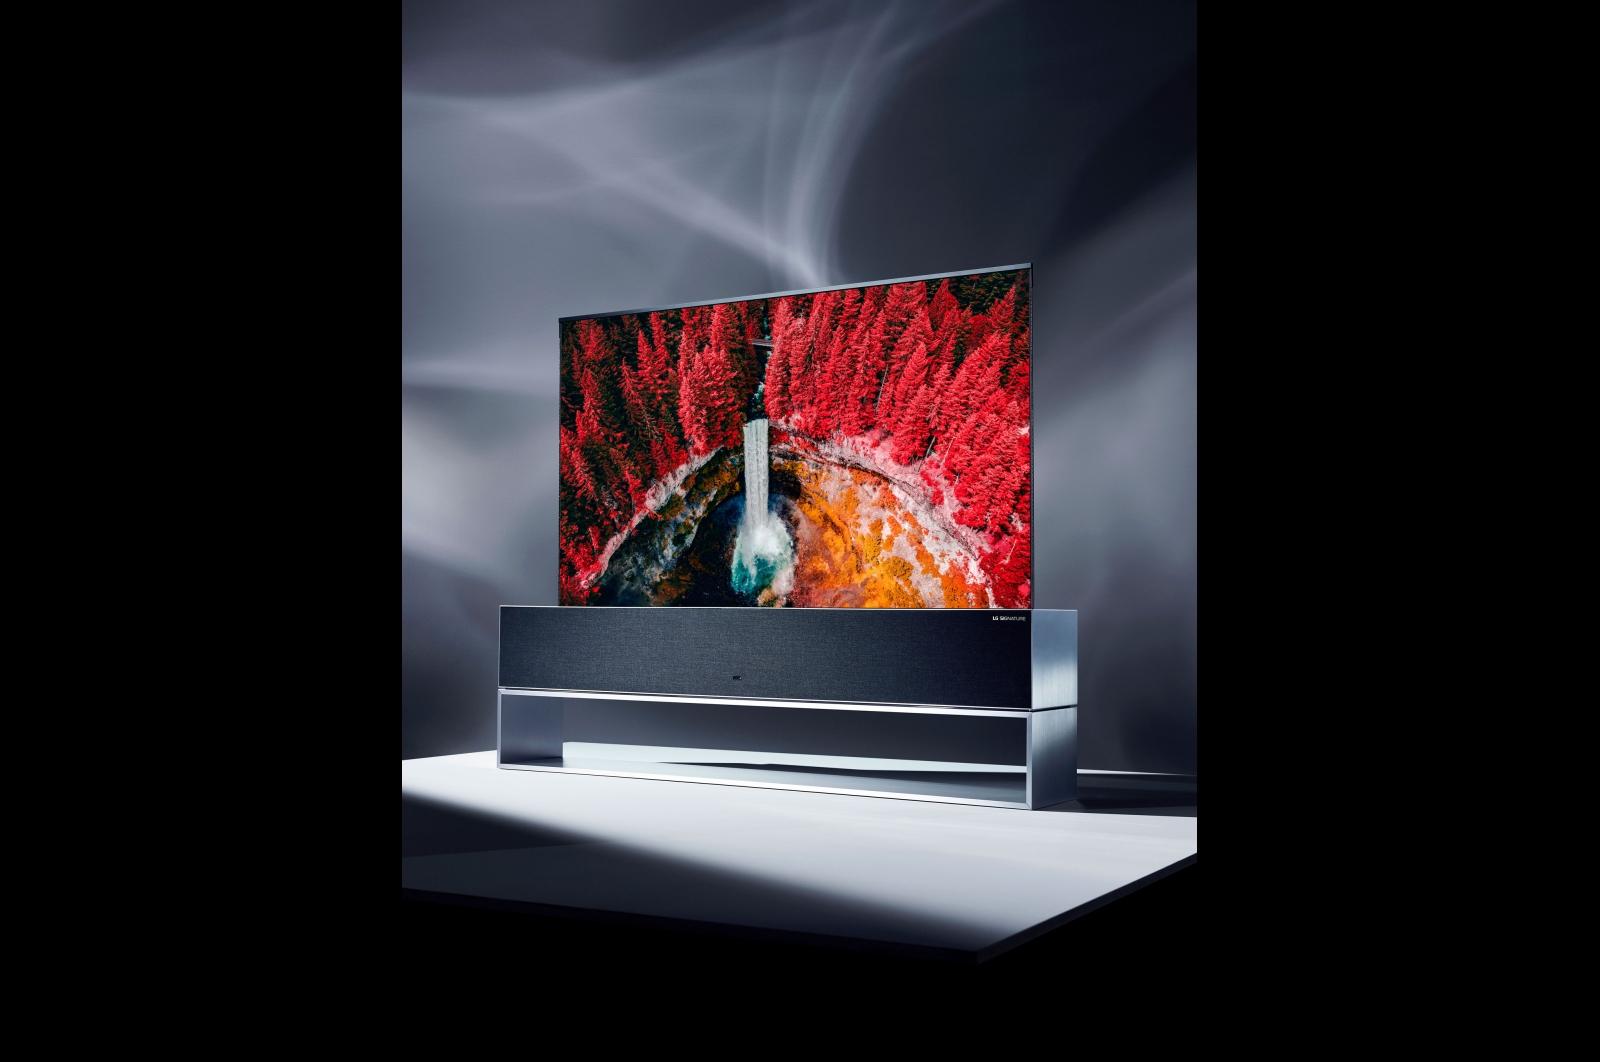 LG 65R9 Signature OLED TV 4K HDR Smart TV 65'' Class